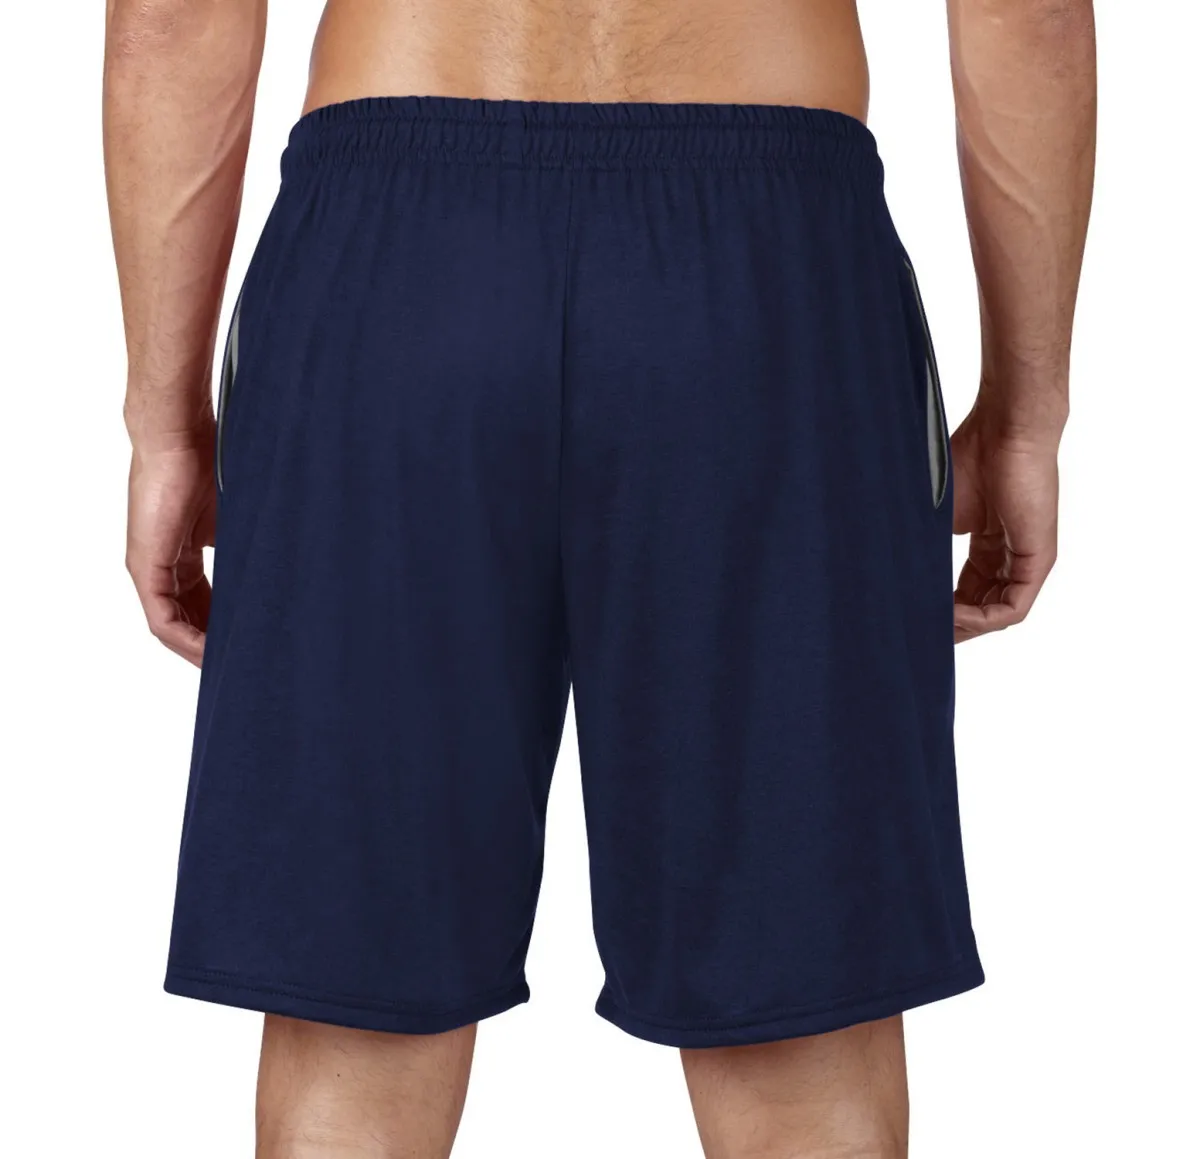 Shorts dark blue/navy